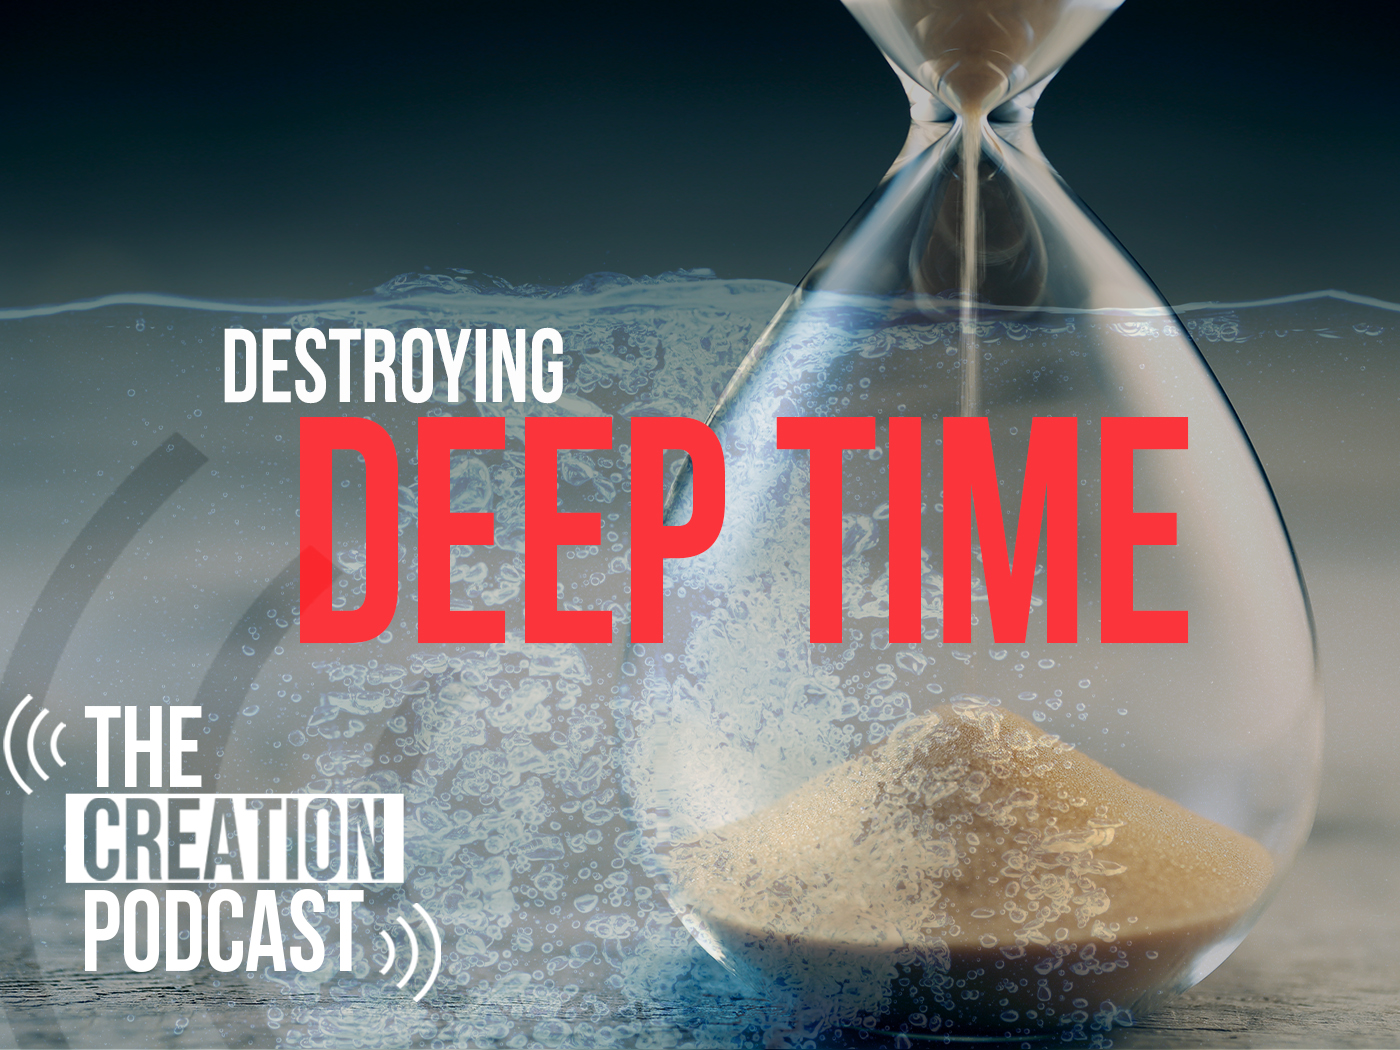 Rapid Erosion Devastates Deep Time! | The Creation Podcast: Episode 67